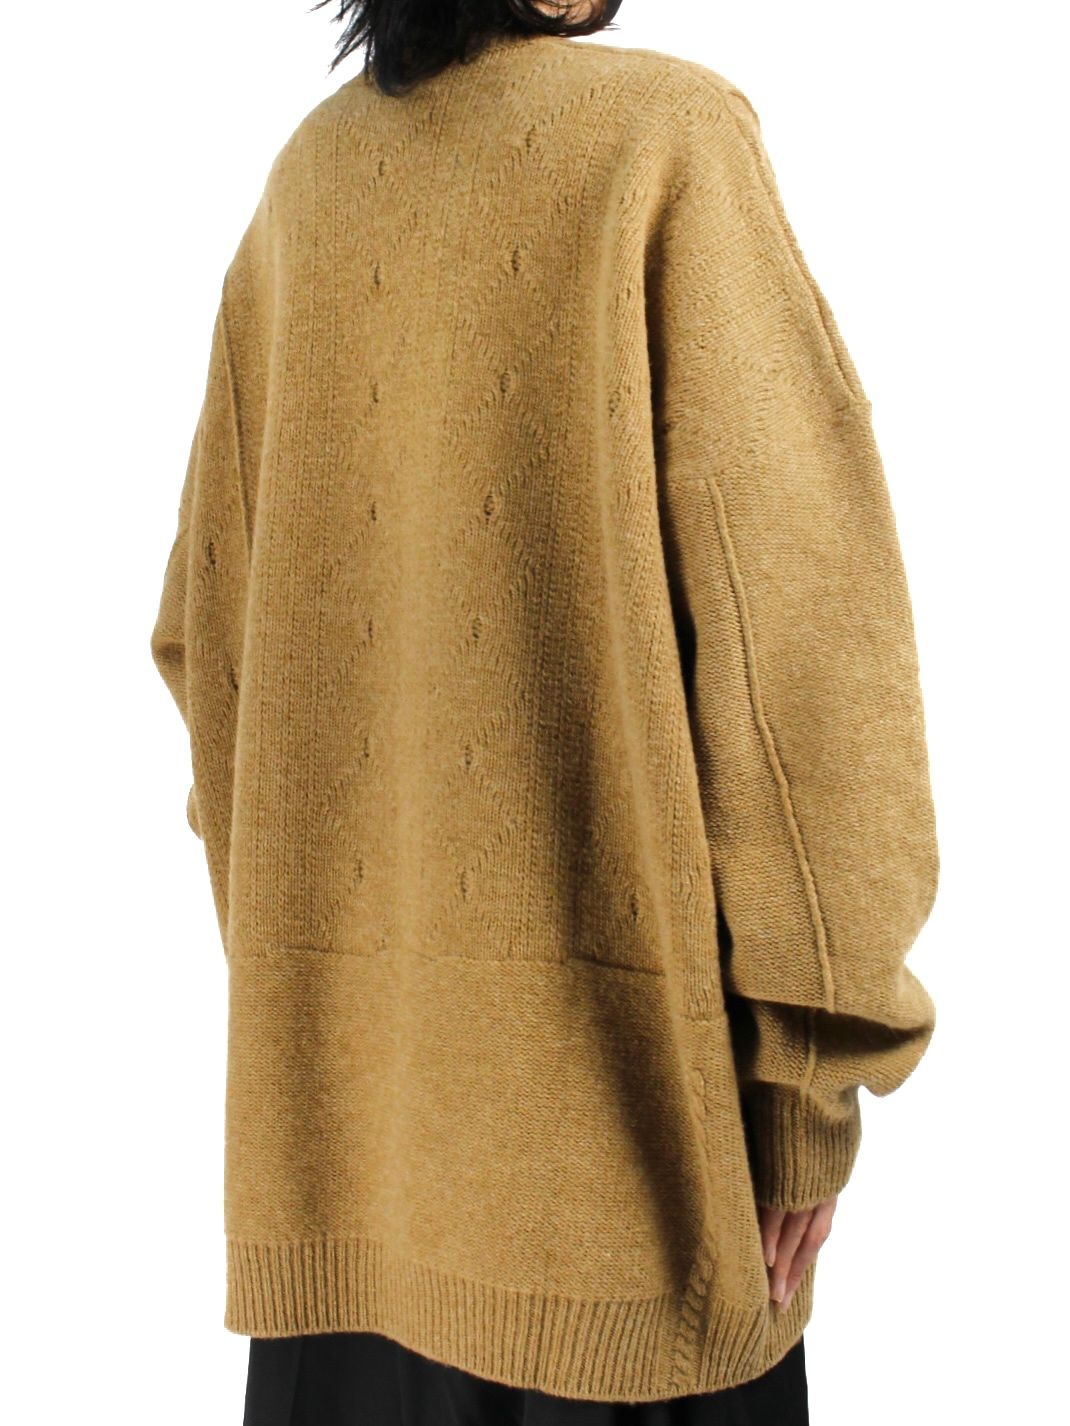 【22SS】オーバーサイズ フロントプリント ニットセーター / Loose fit reversed braid sweater printed  front / ブラウン×レッド - ブラウン - 1(S)